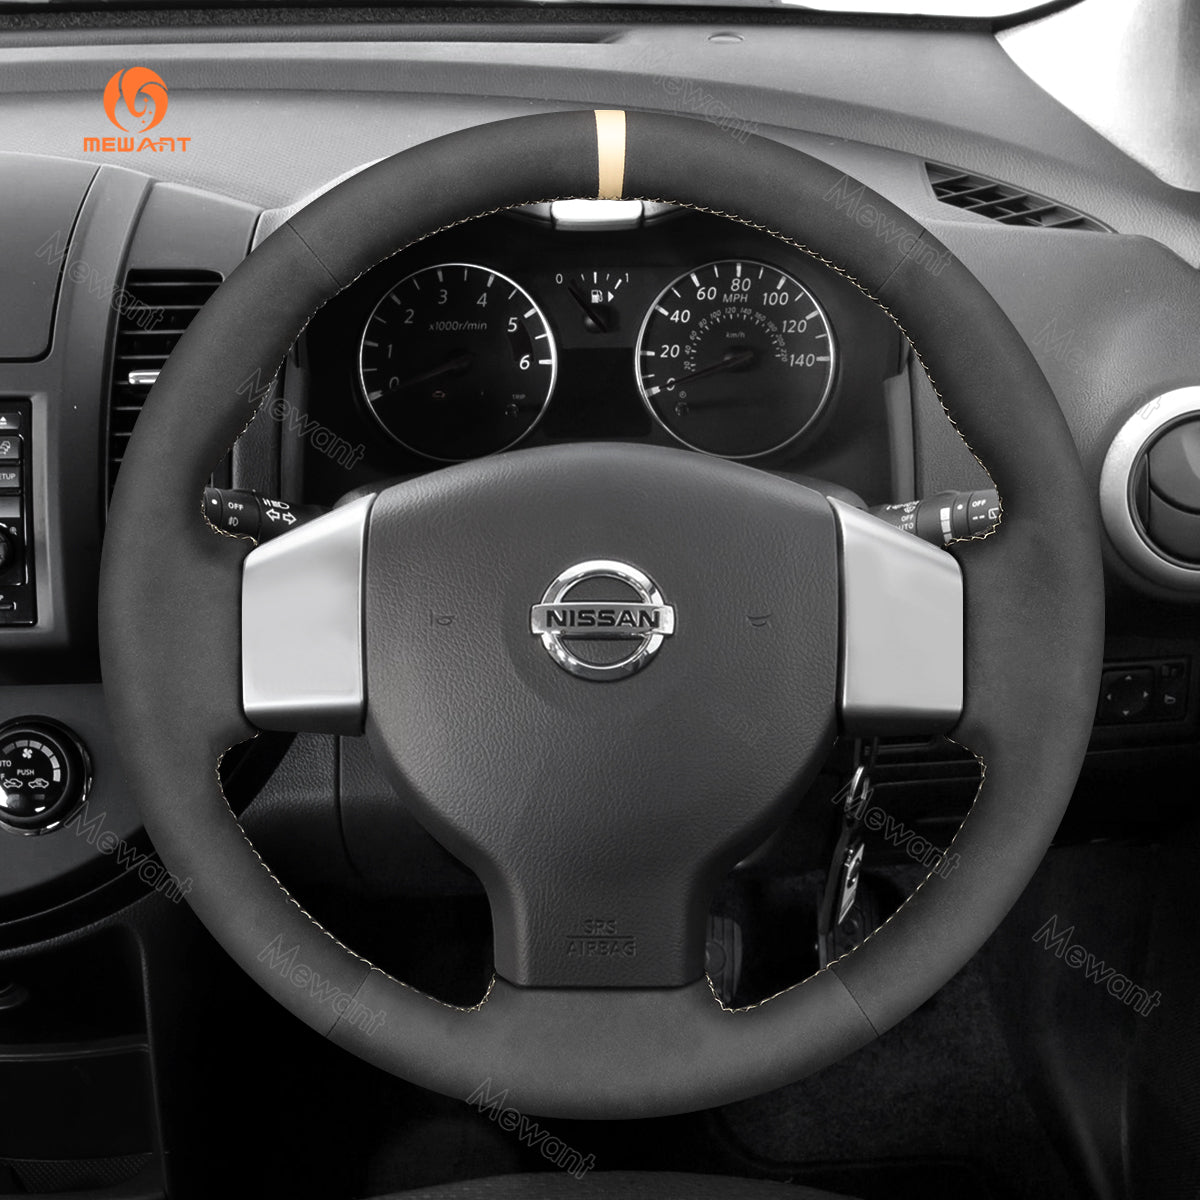 Car Steering Wheel Cover for Nissan Note / Tiida / Bluebird Sylphy / Versa / Versa Note